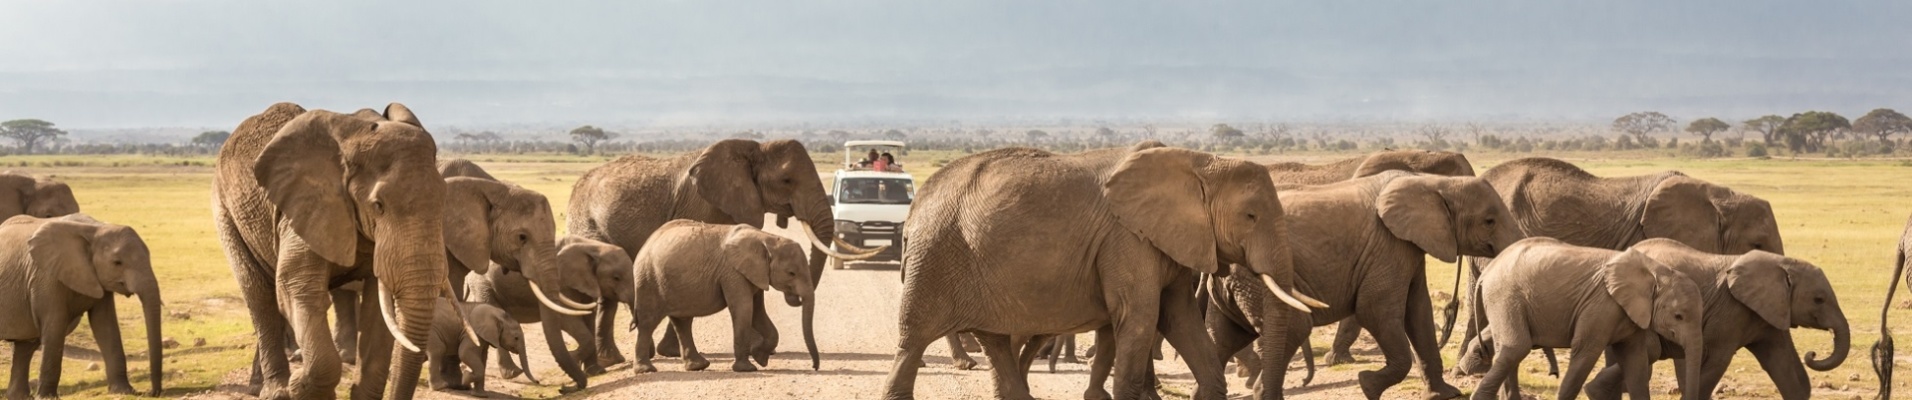 safari elephants tanzanie